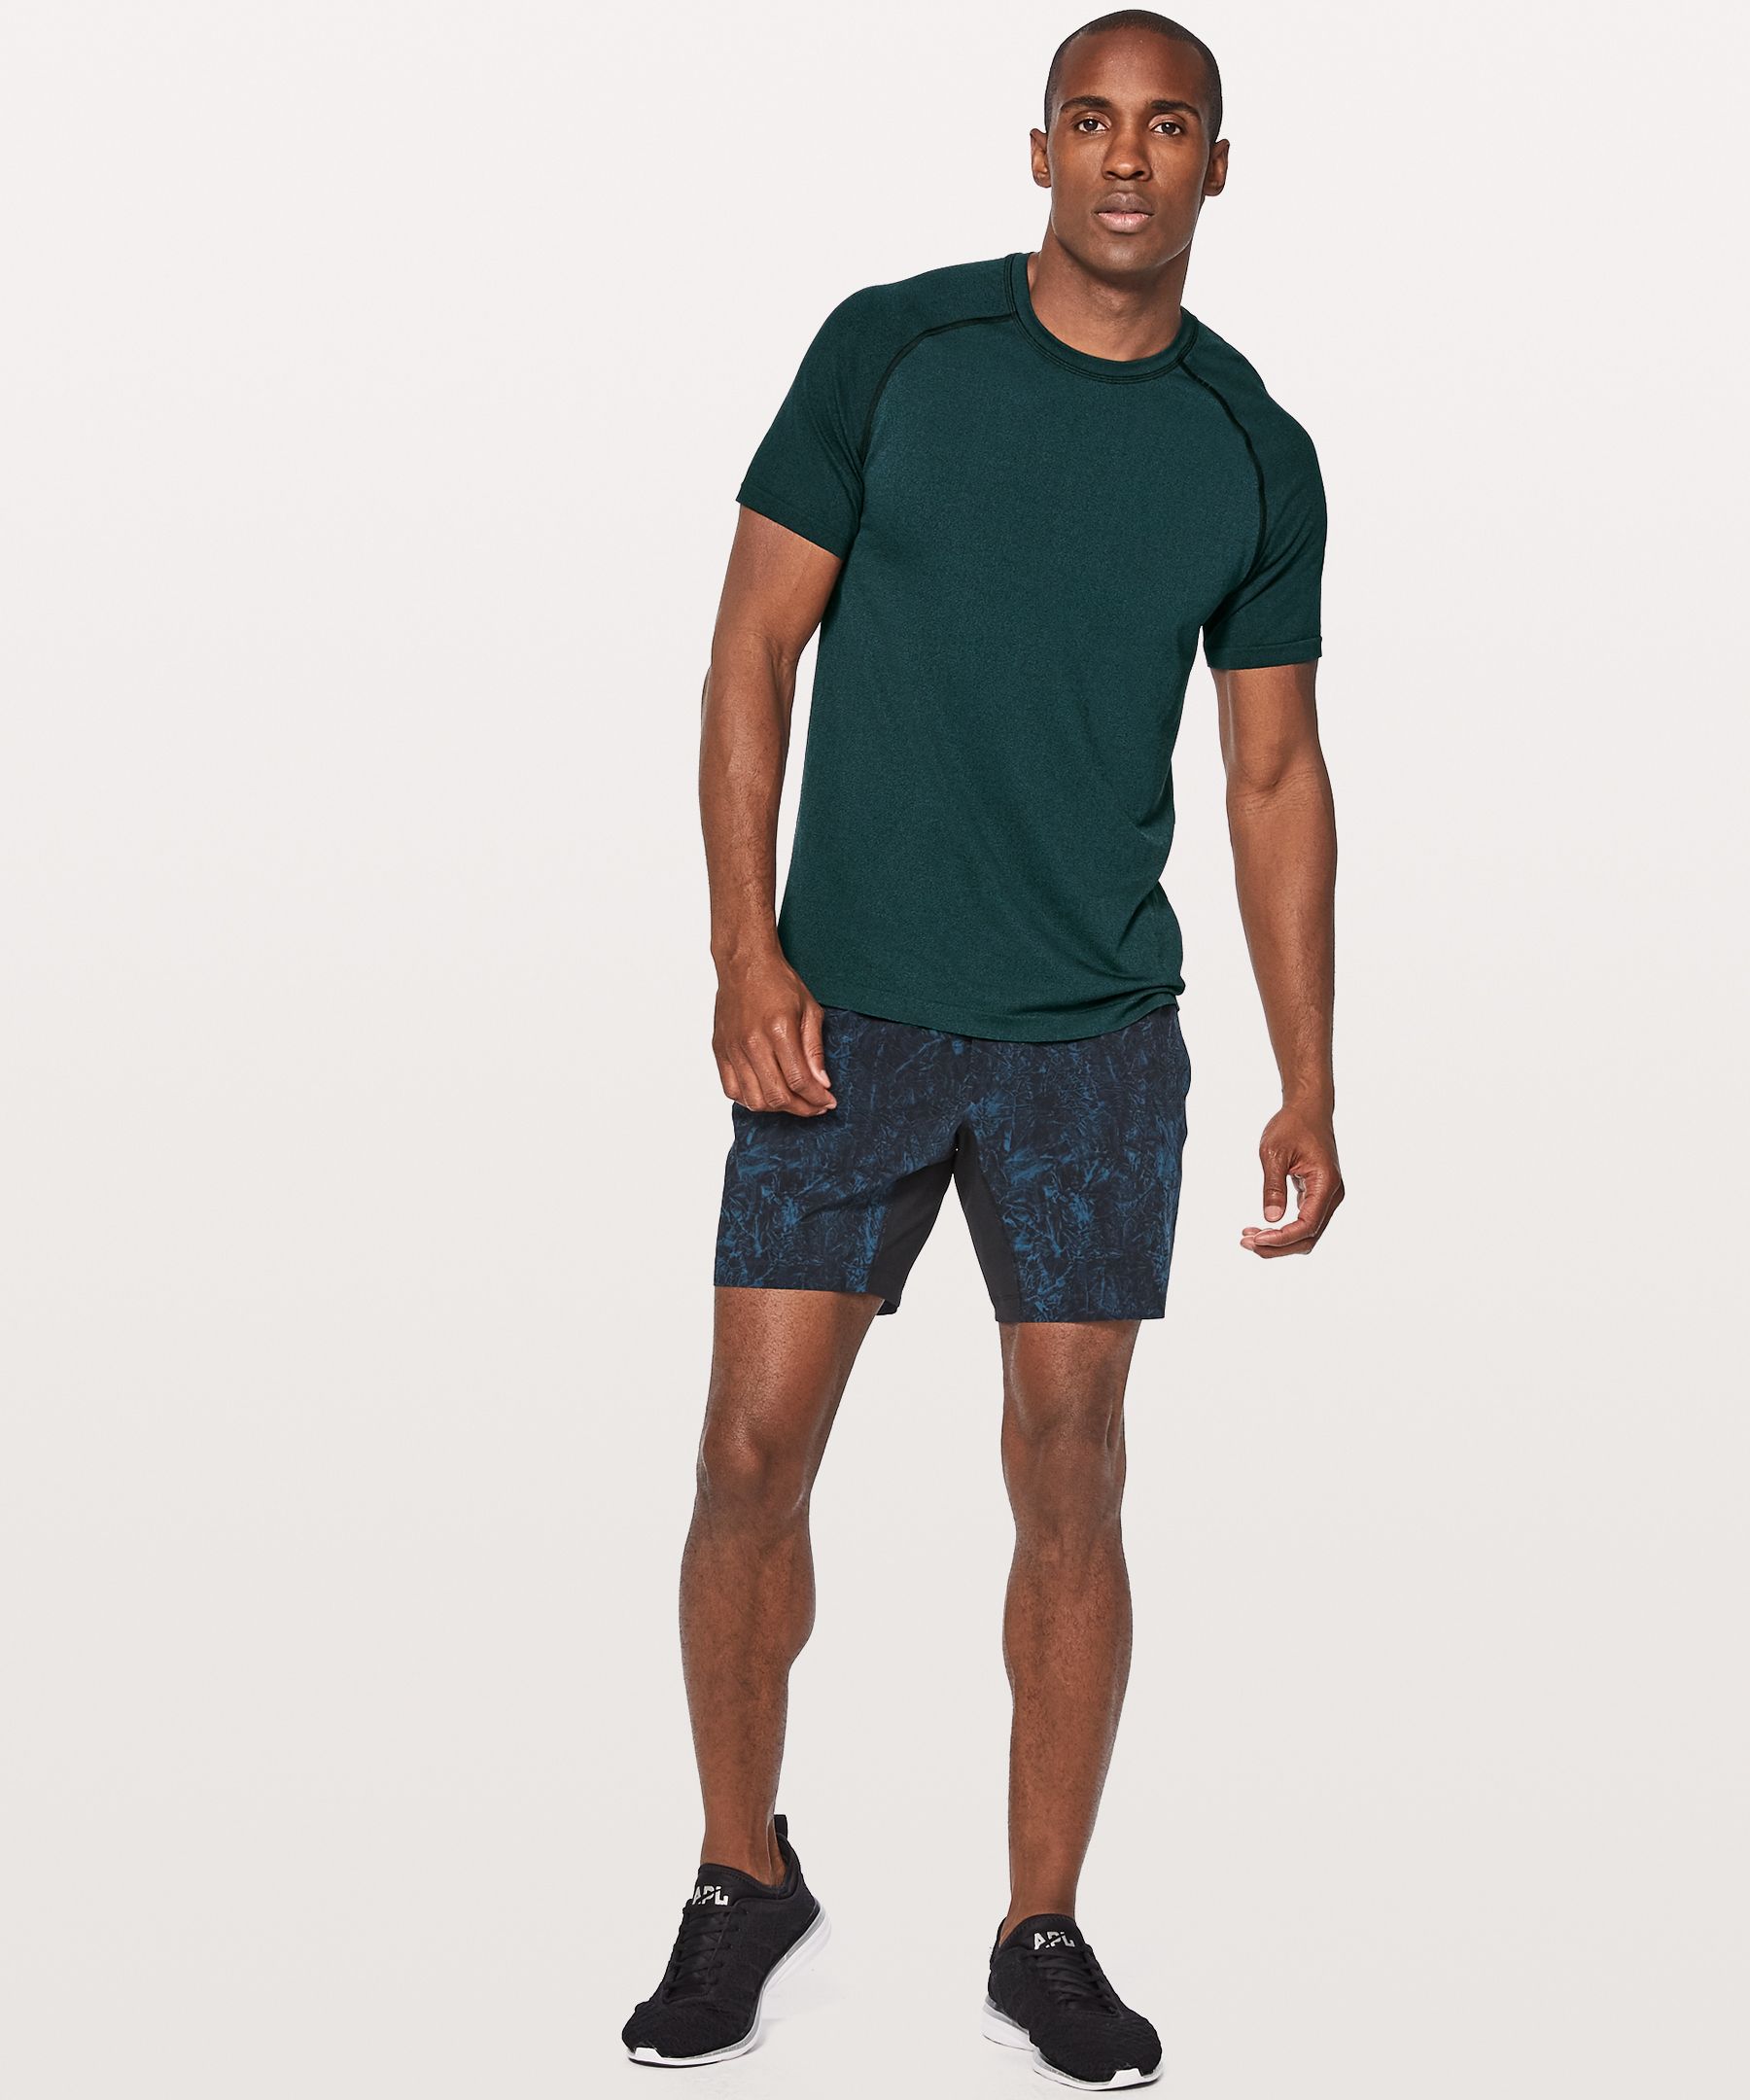 Men's running + workout shirts | yoga tops | lululemon athletica'